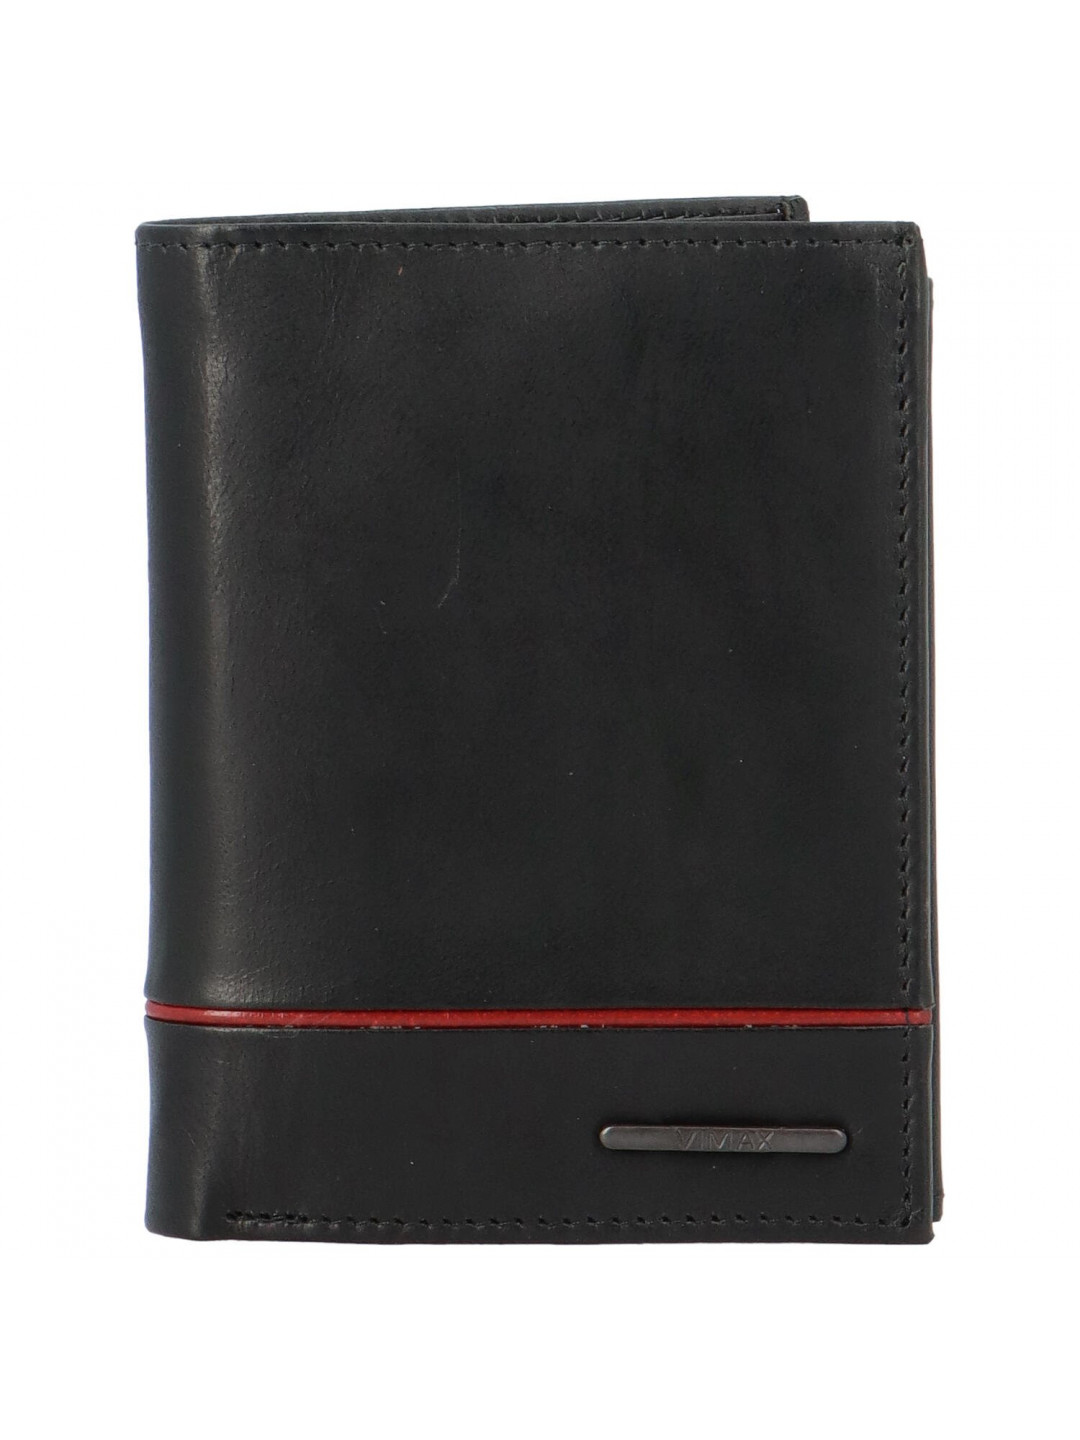 Pánská kožená peněženka na výšku Vimax Ezrant černo červená